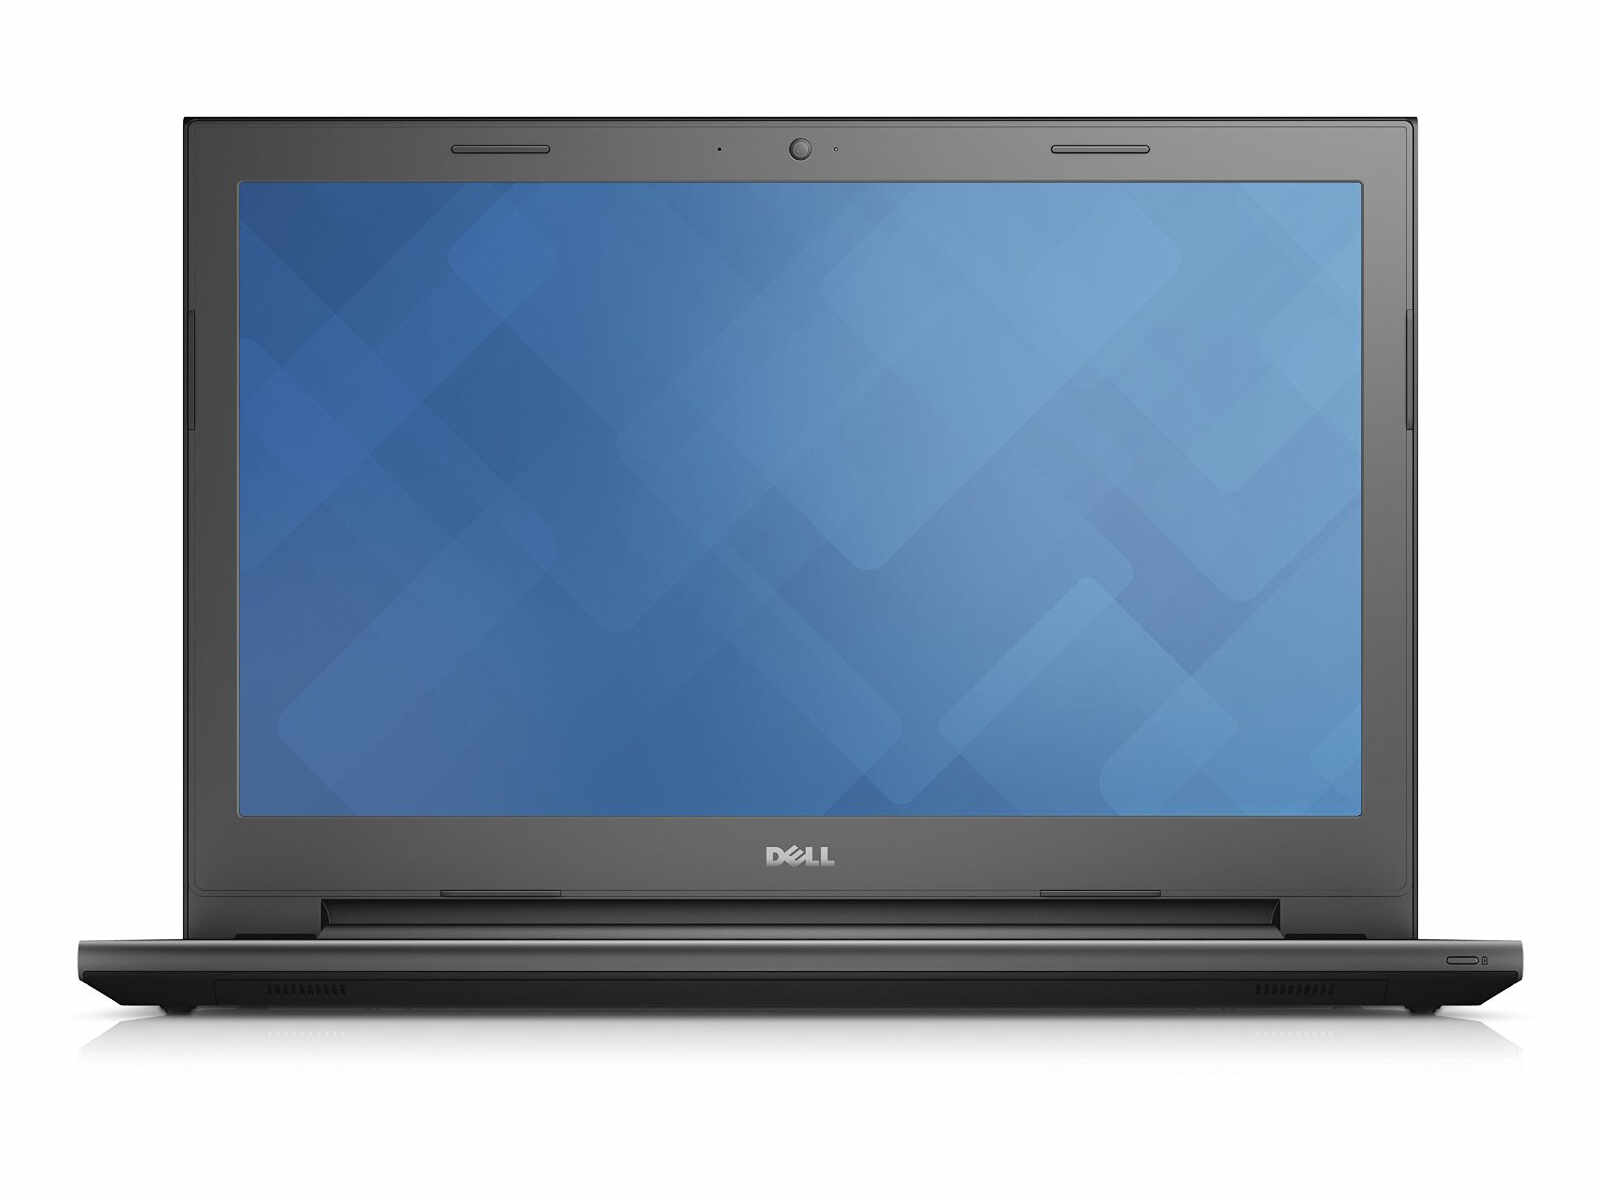 Laptop Second Hand Dell Vostro 3549, Intel Celeron 3205U 1.50GHz, 4GB DDR3, 500GB SATA, 15.6 Inch HD, Tastatura Numerica, Webcam, Grad A-